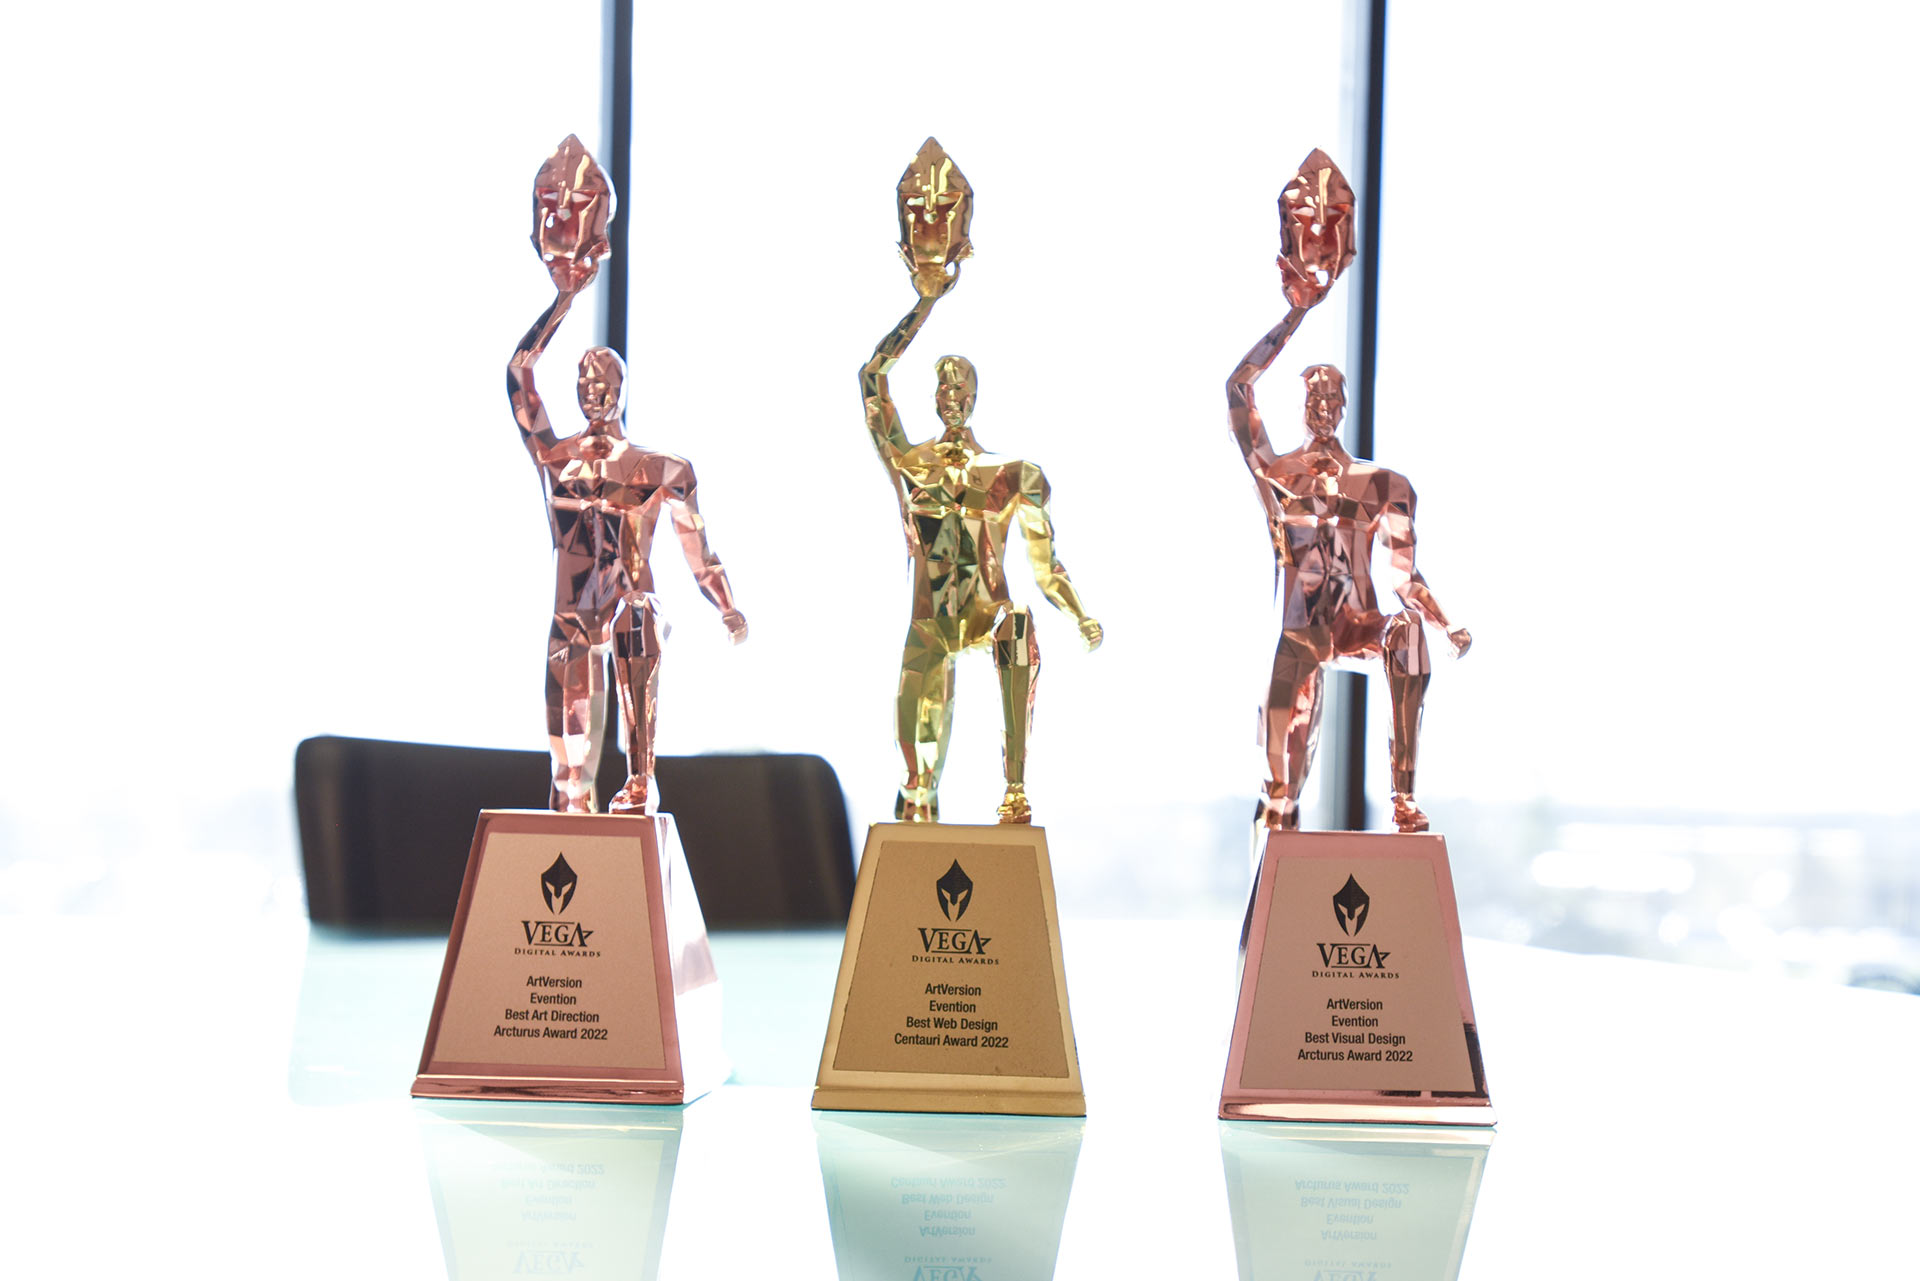 Three VEGA award trophies onto of a desk.